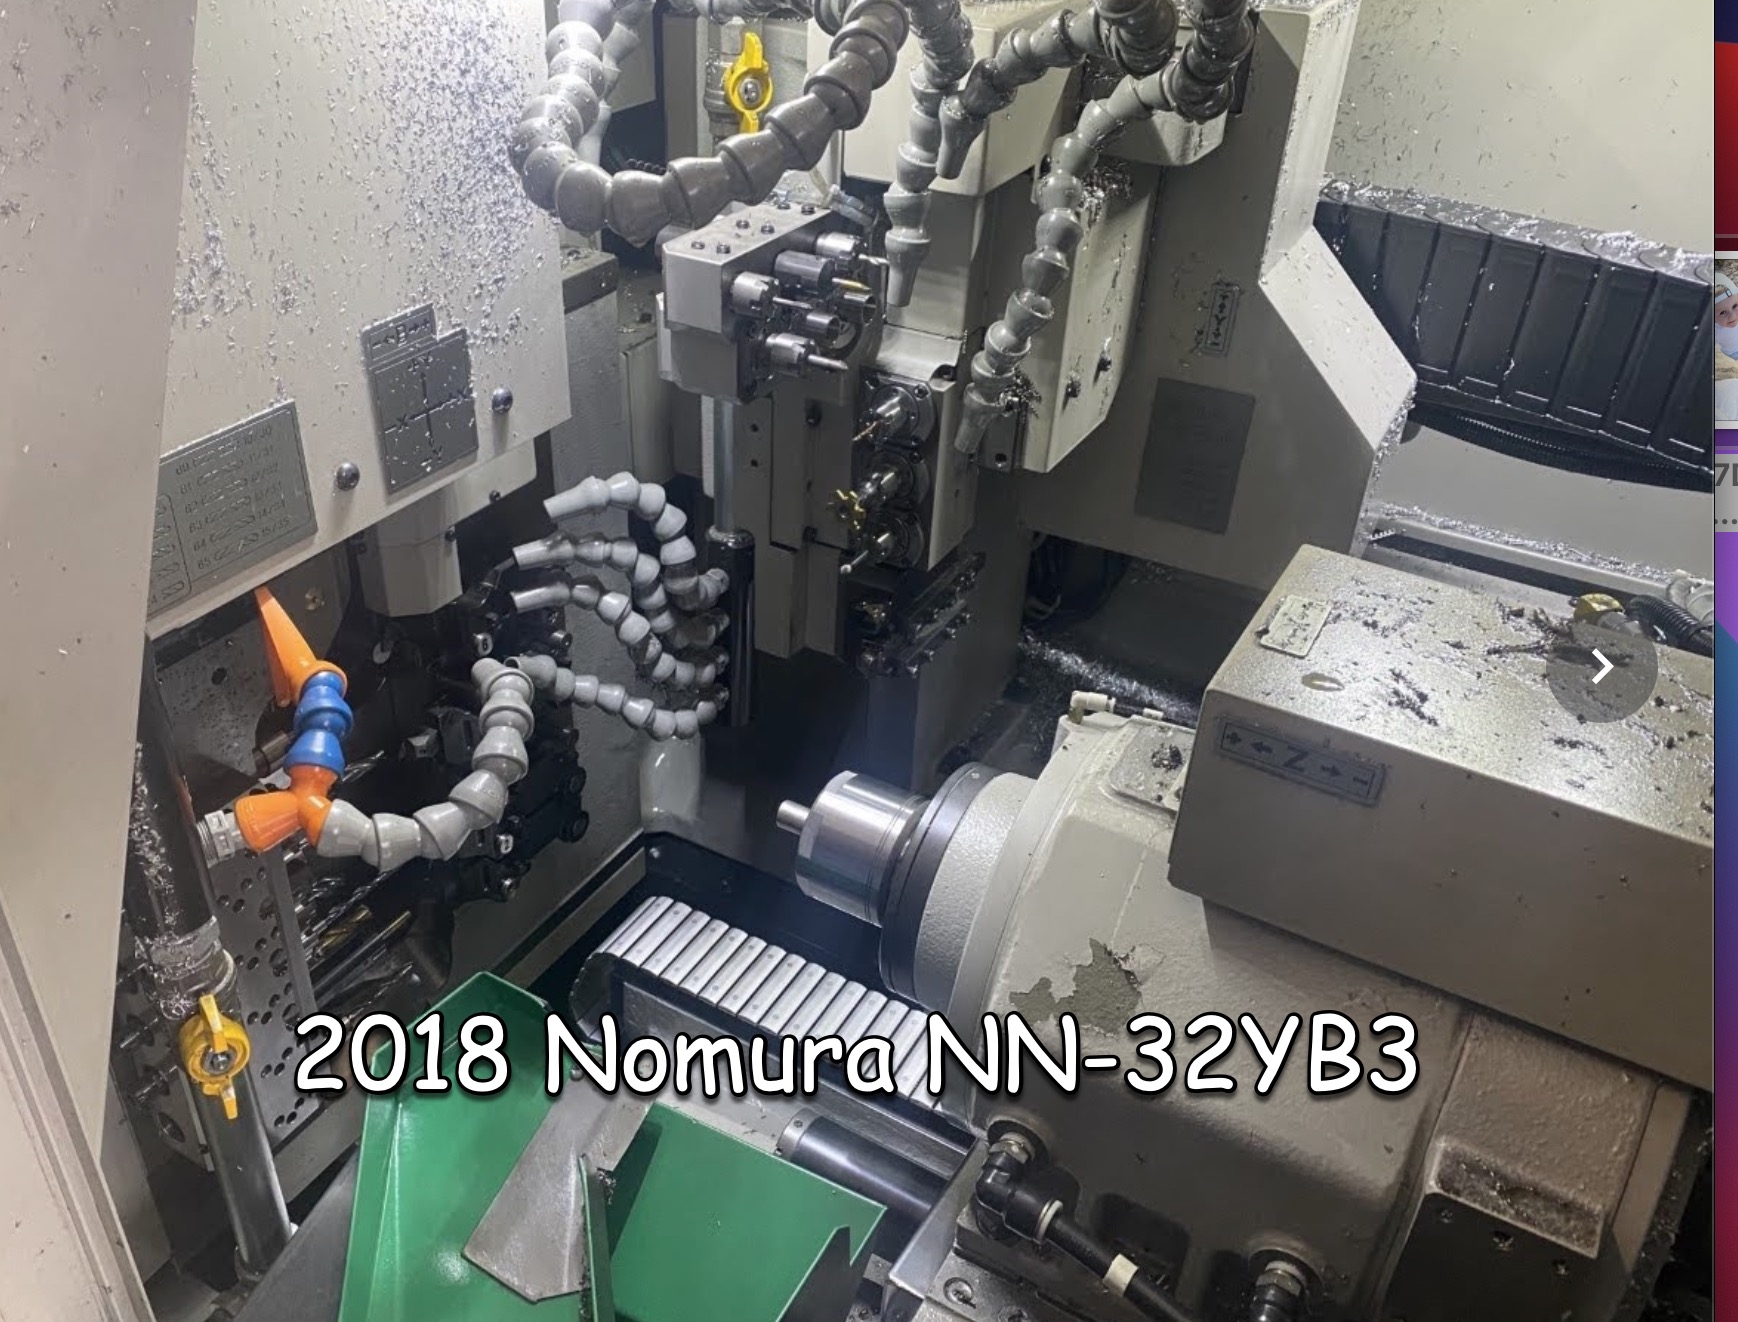 Nomura NN-32YB3 2018